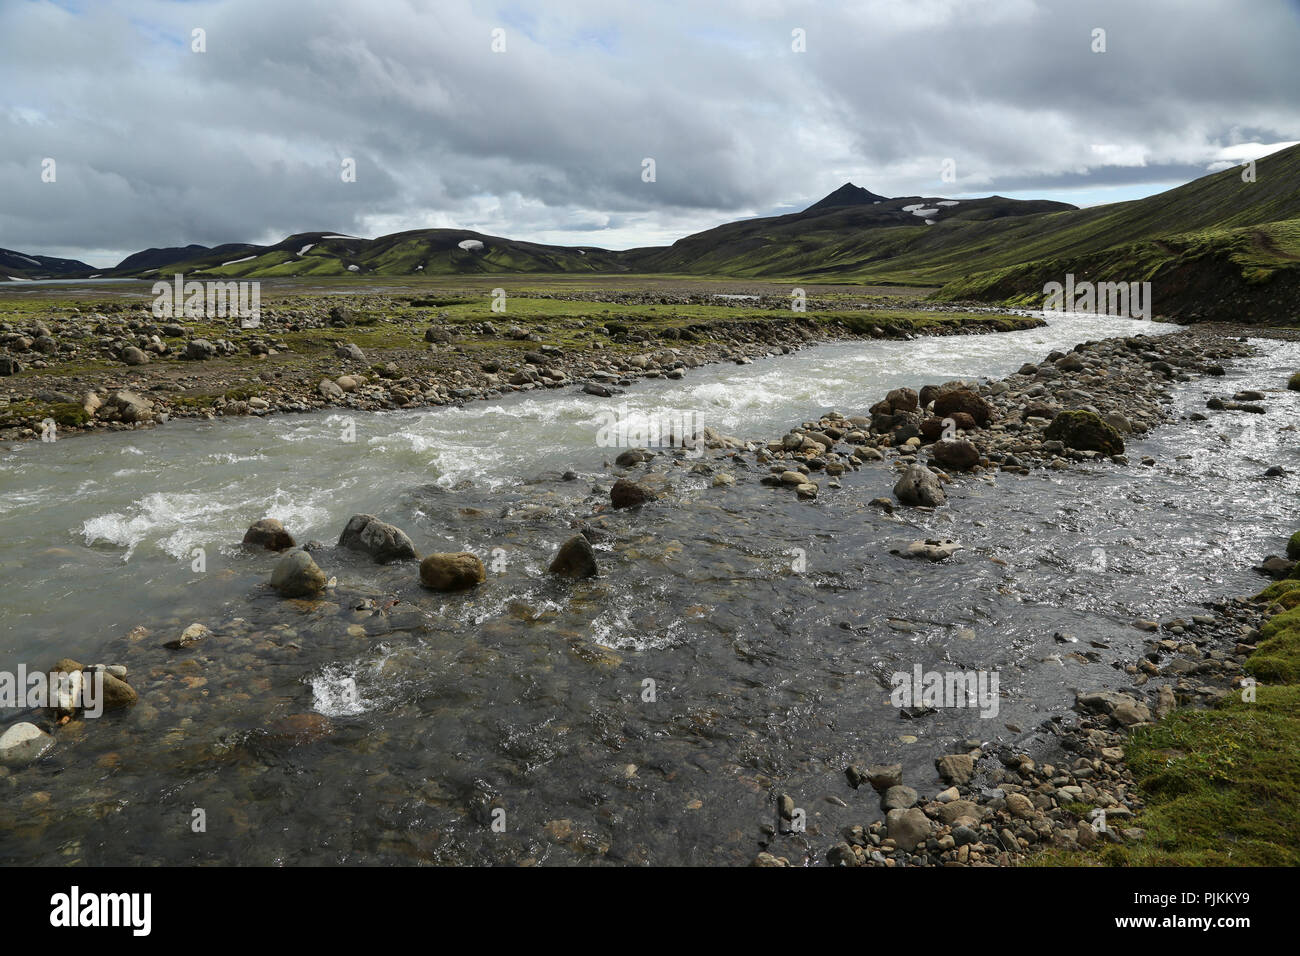 Iceland, Fjallabak, Holmsa River, Holmsarbotnar Moorland, green mountainsides, sunshine, Stock Photo